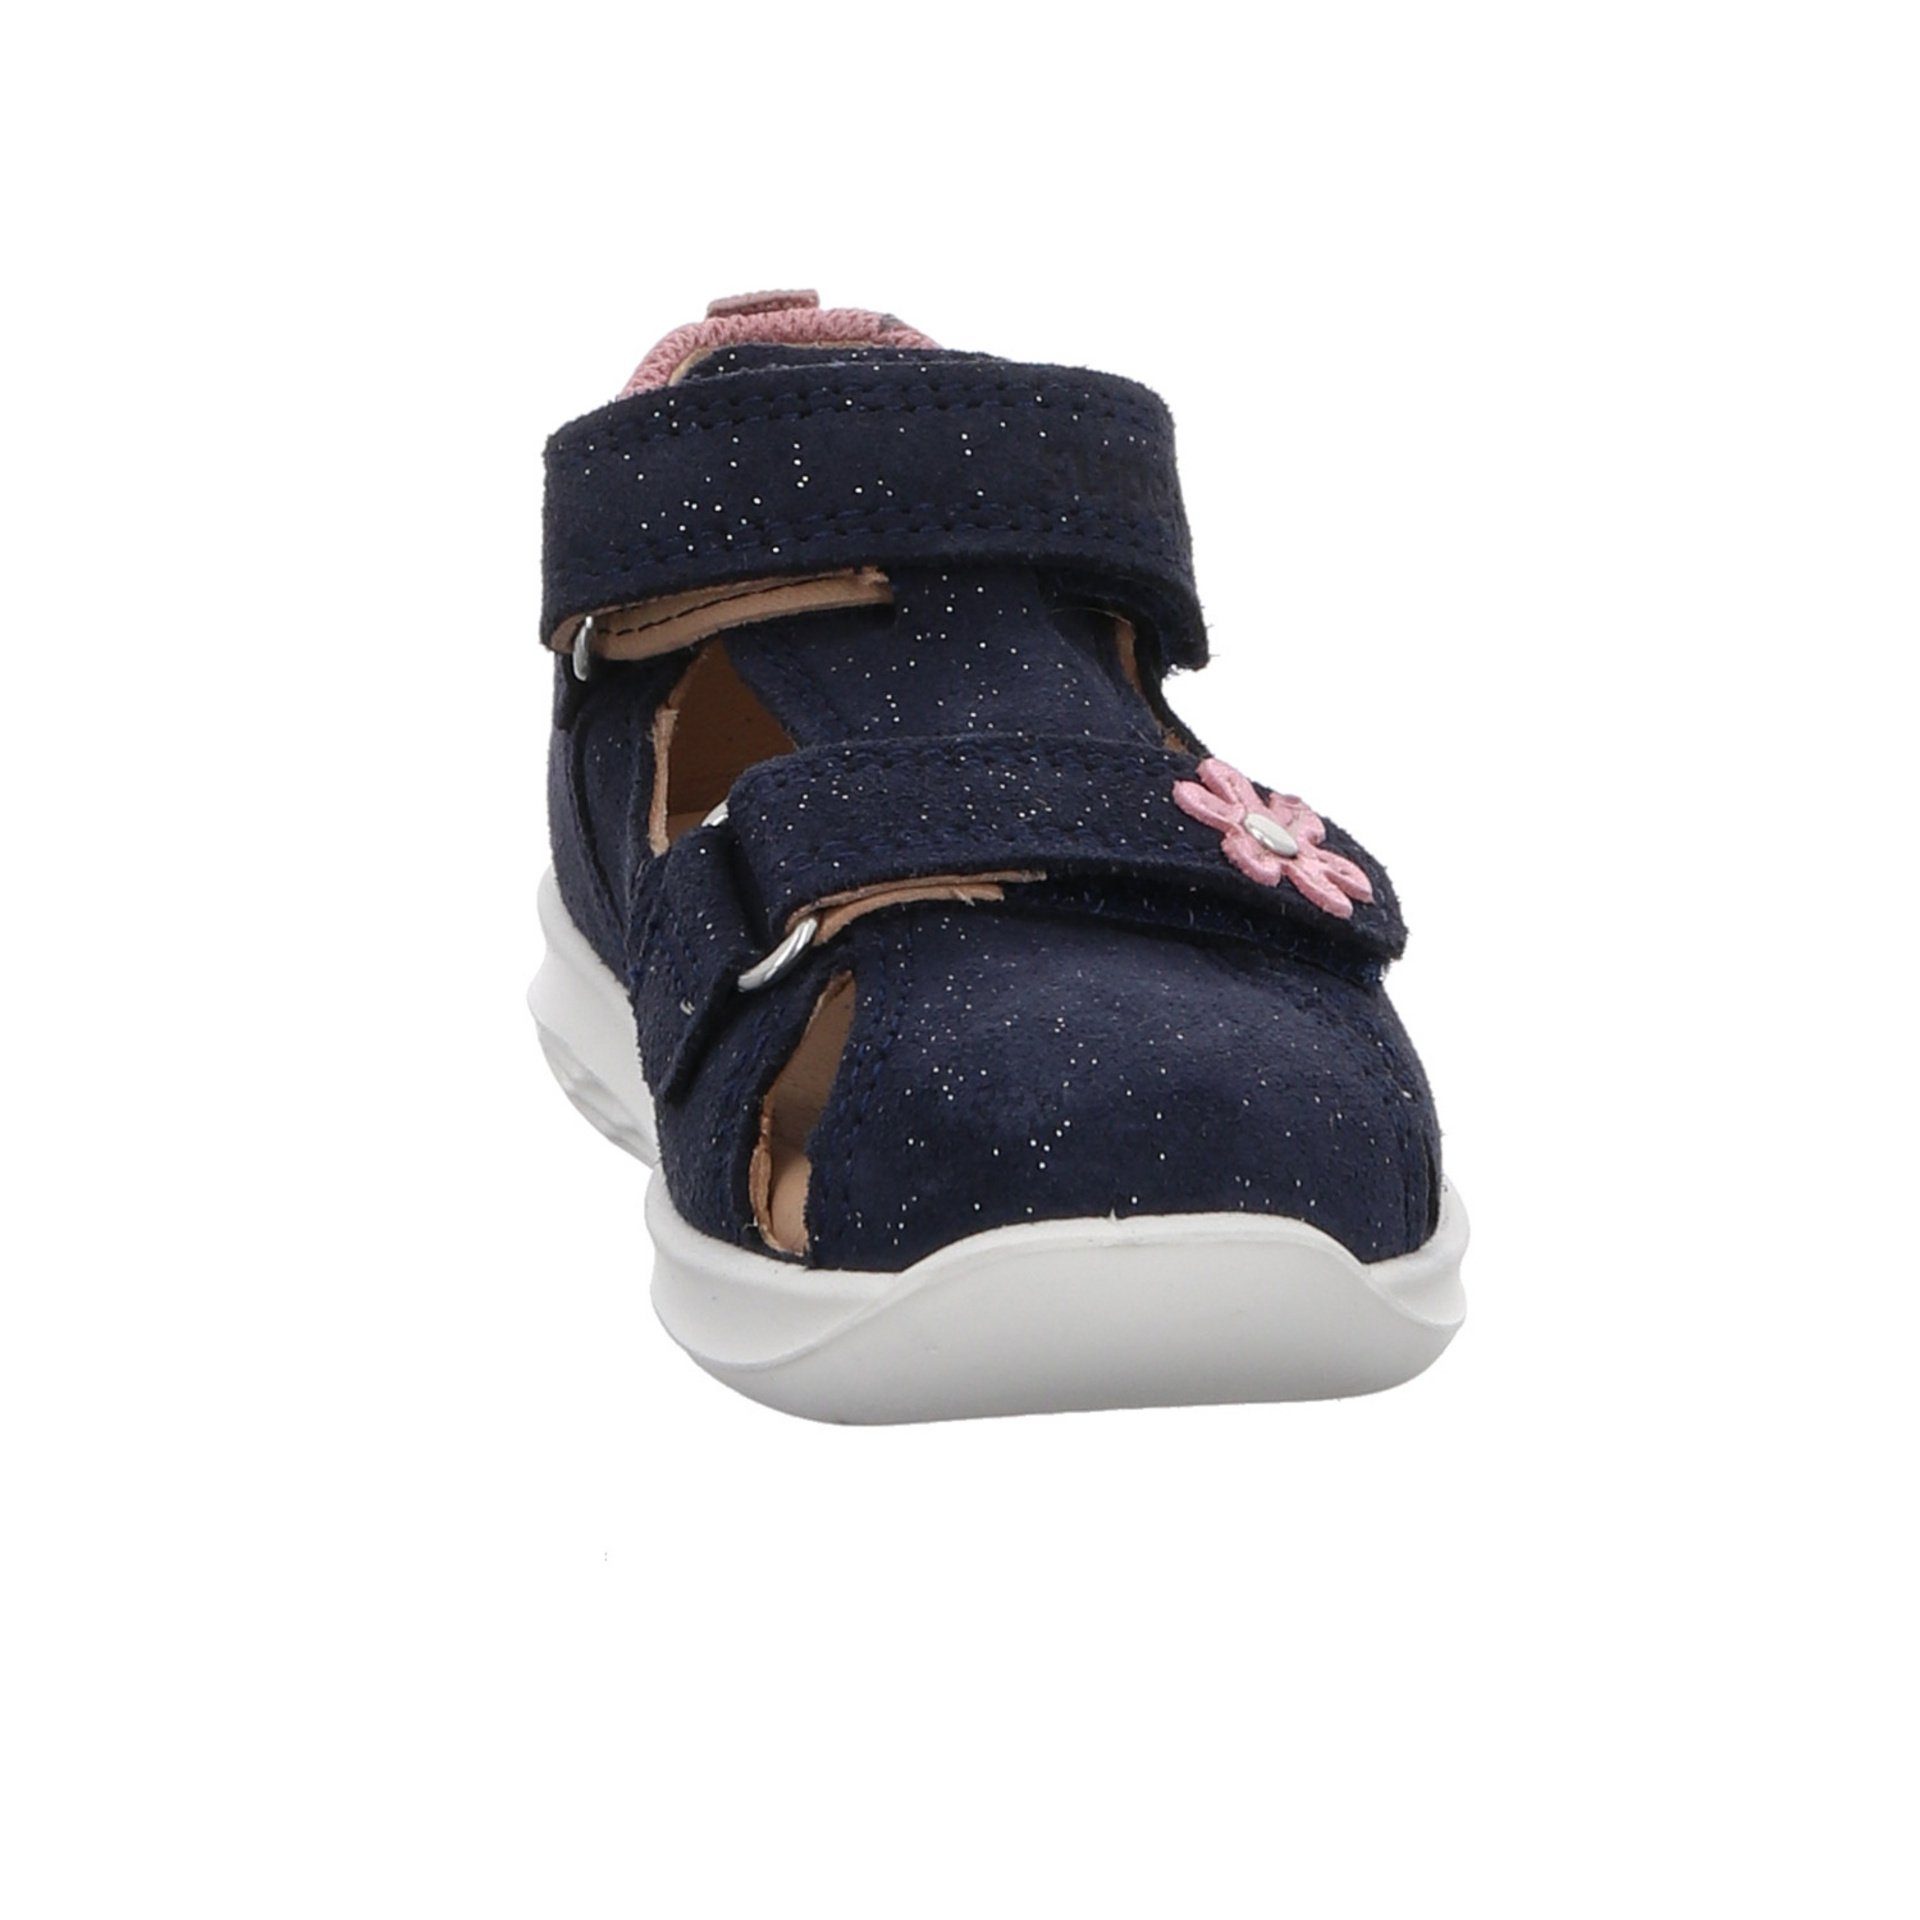 Schuhe Leder-/Textilkombination Sandale sonst Kombi blau Mädchen Bumblebee Superfit Sandalen Minilette